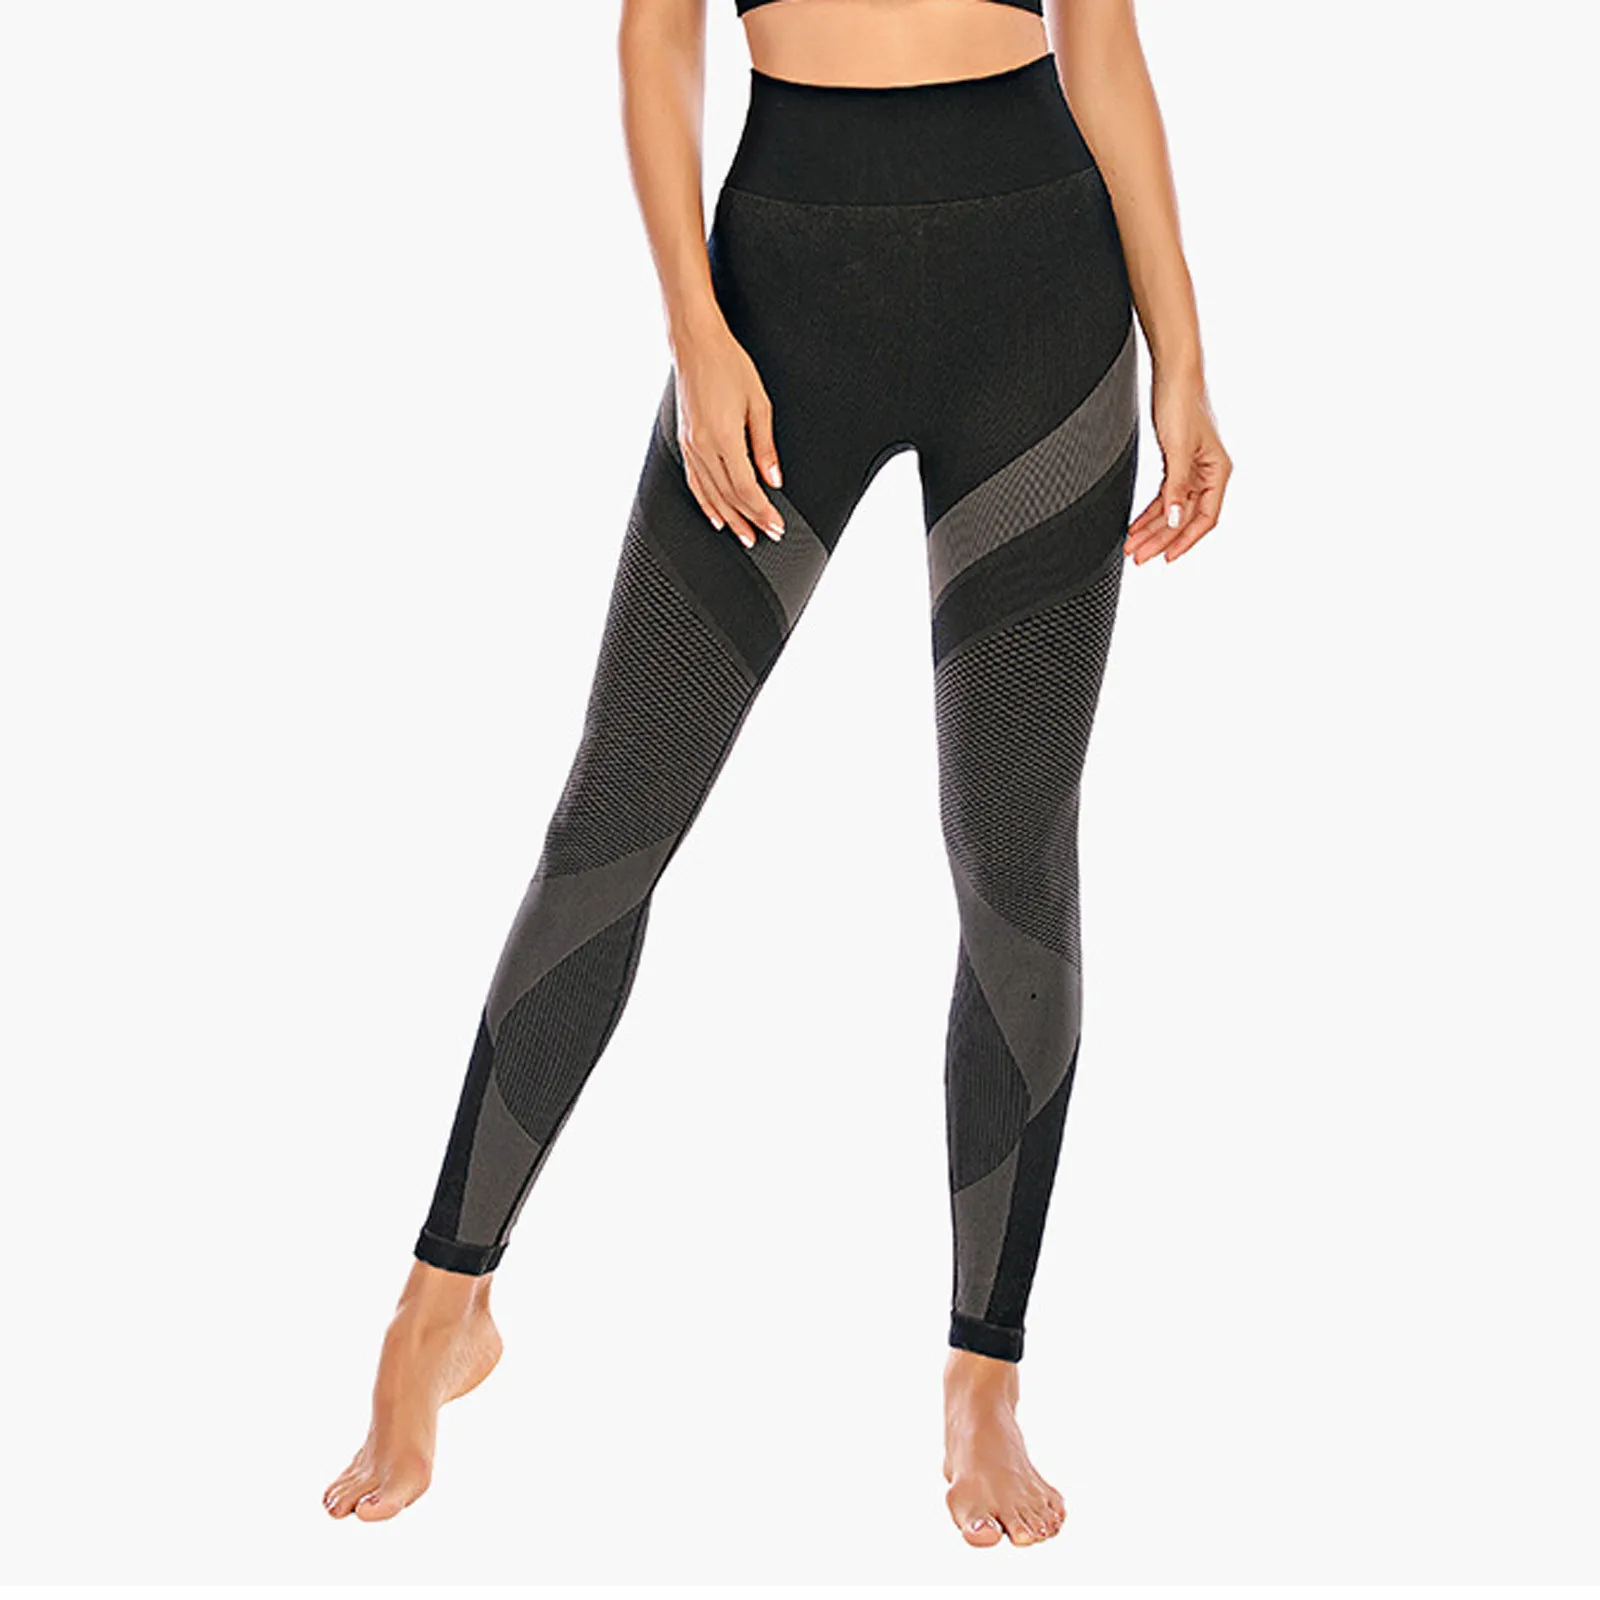 

Sagace 2021 New Yoga Pants Women's Print Workout Leggings Fitness Sports Running Yoga Athletic Pants